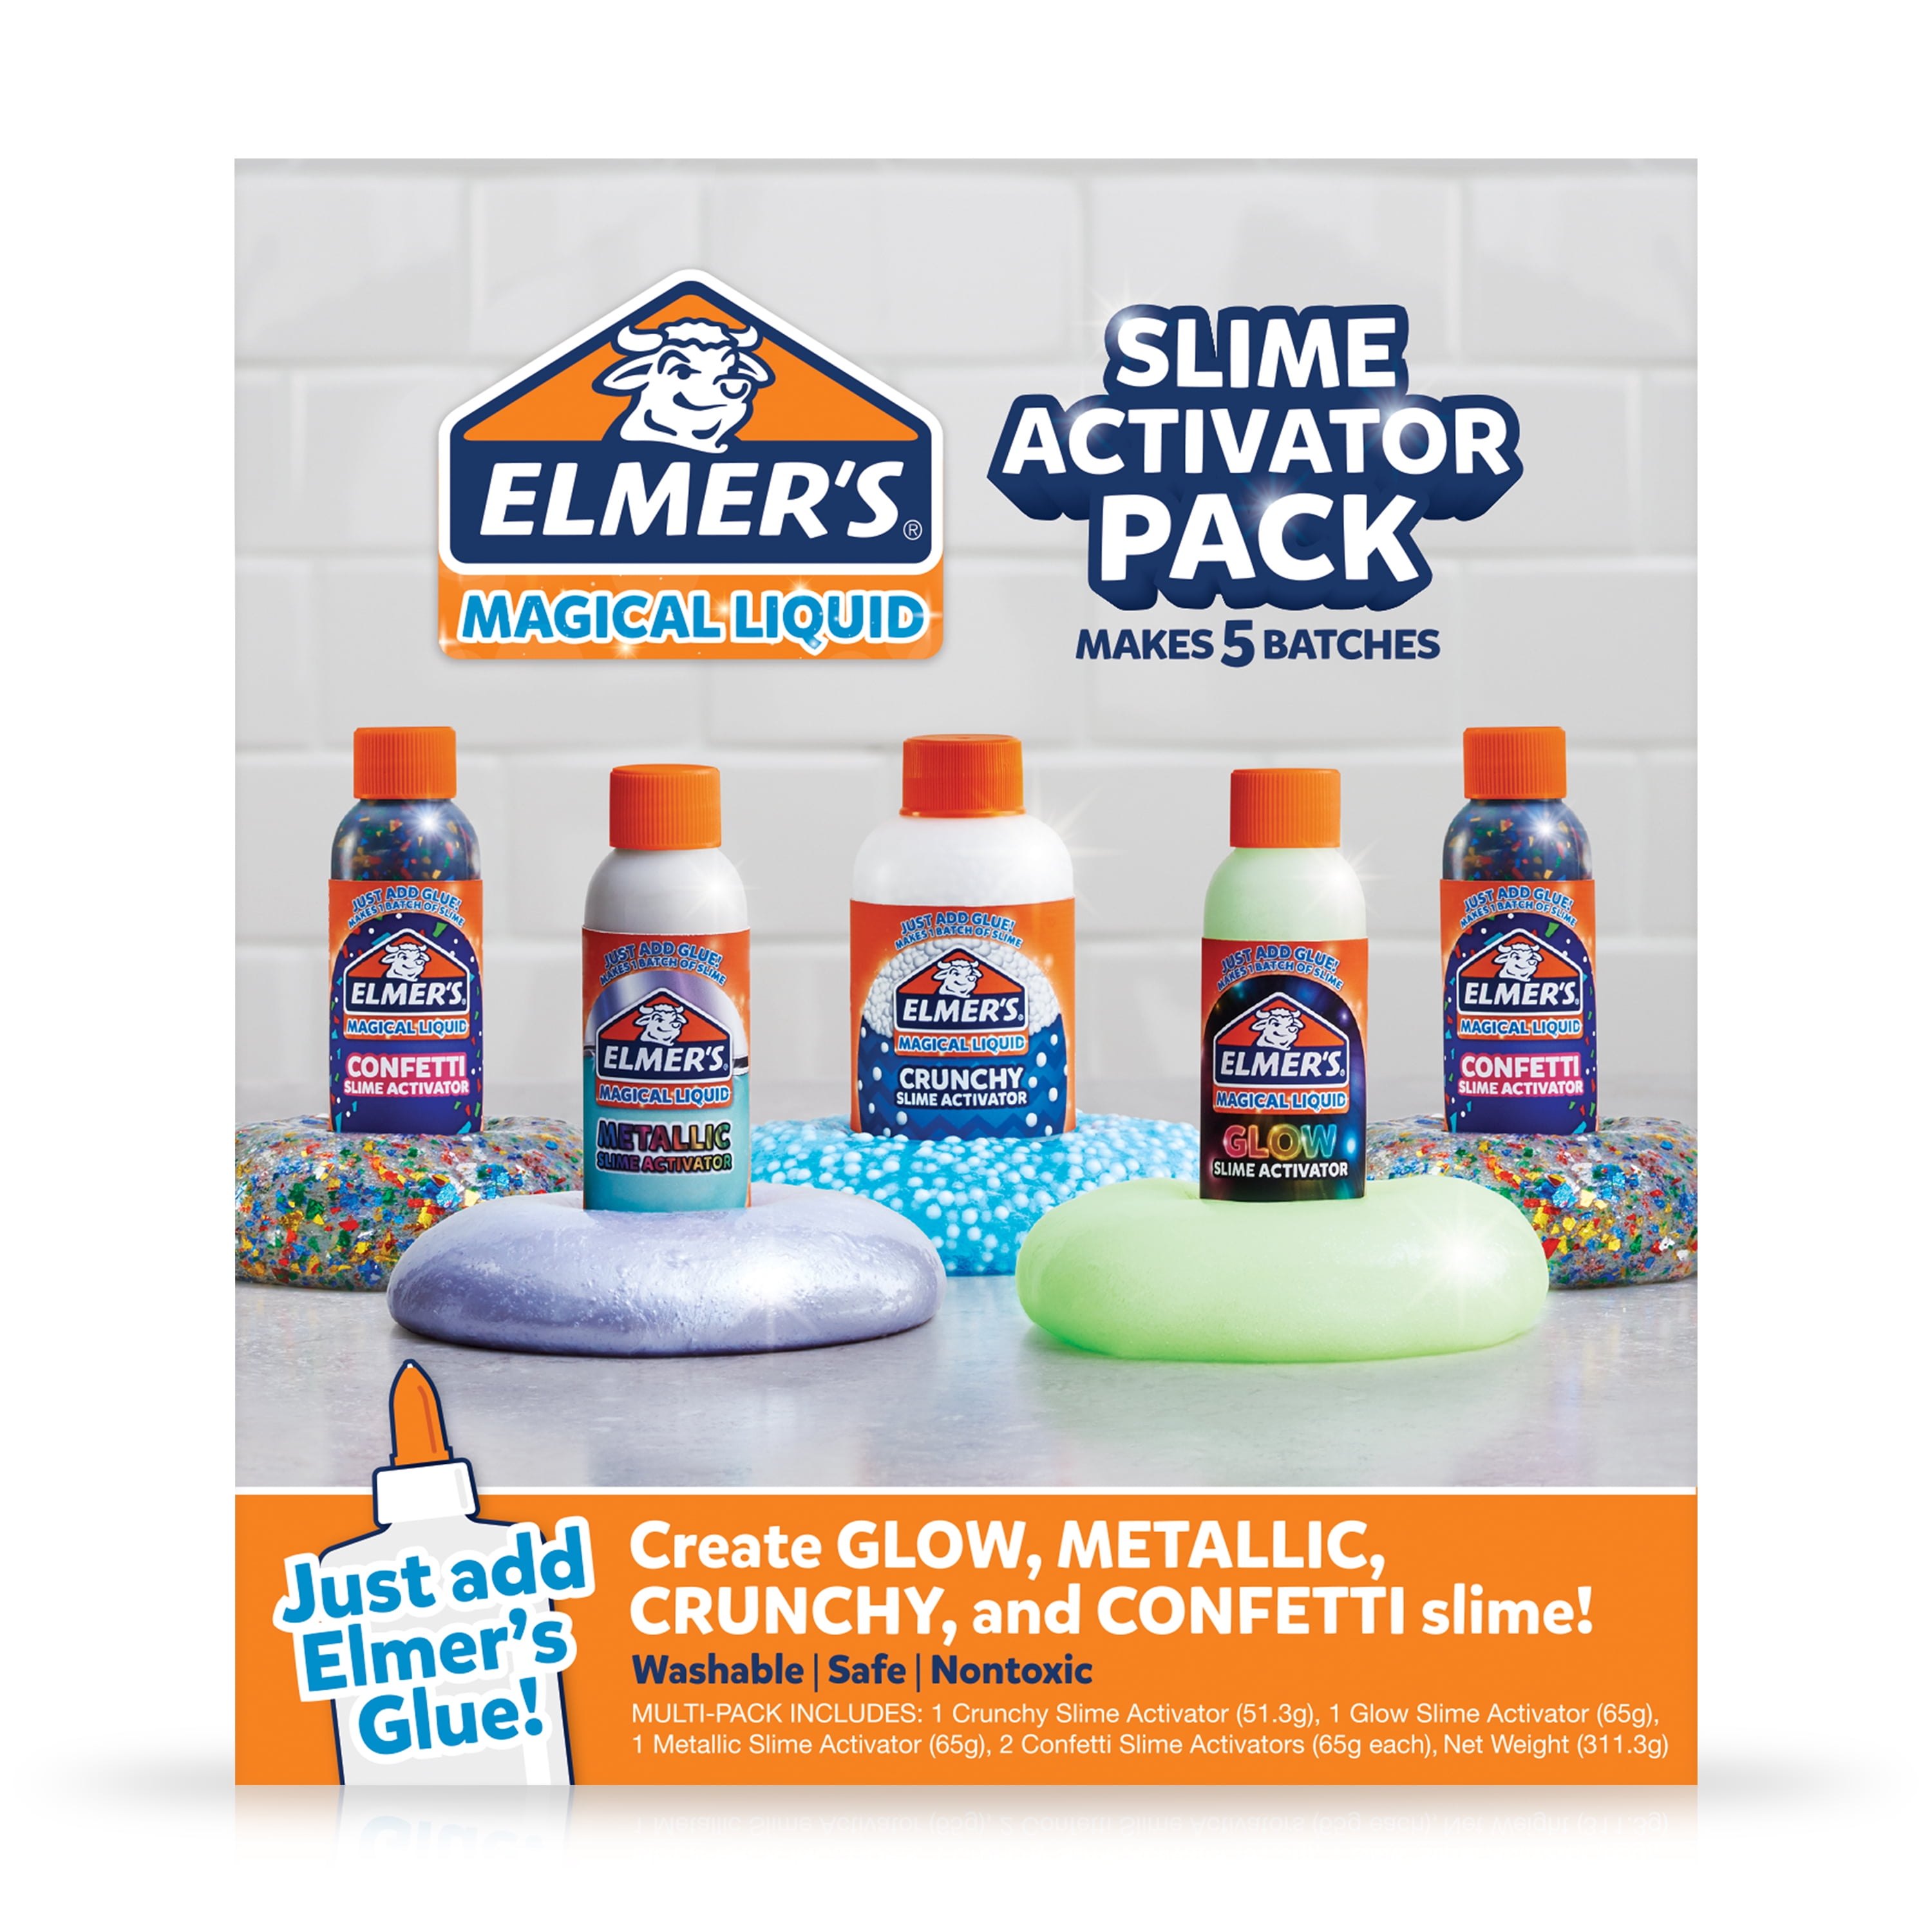 Elmer's Glue Magical Liquid Activator Solution, 1 Quart Slime Activator,  Clear & Glow in The Dark Liquid Glue, Washable, Blue, 1 Quart, Glue for  Making Slime